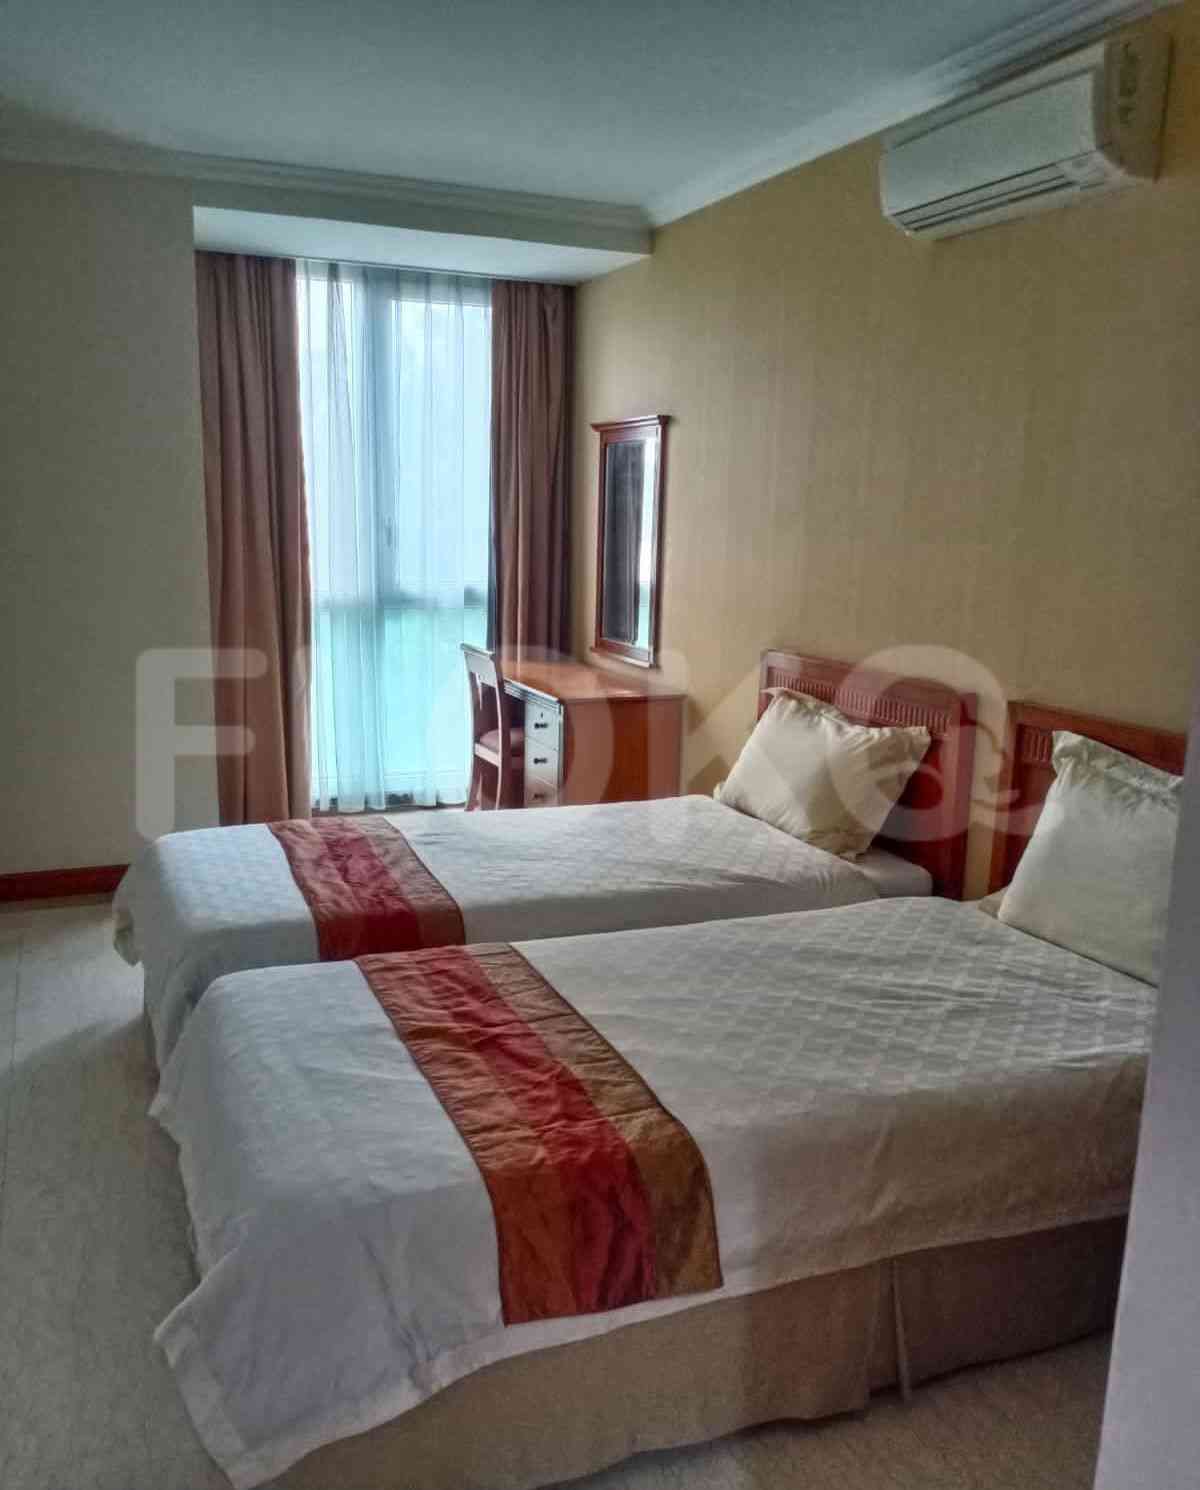 3 Bedroom on 2nd Floor for Rent in Casablanca Apartment - fte11b 3